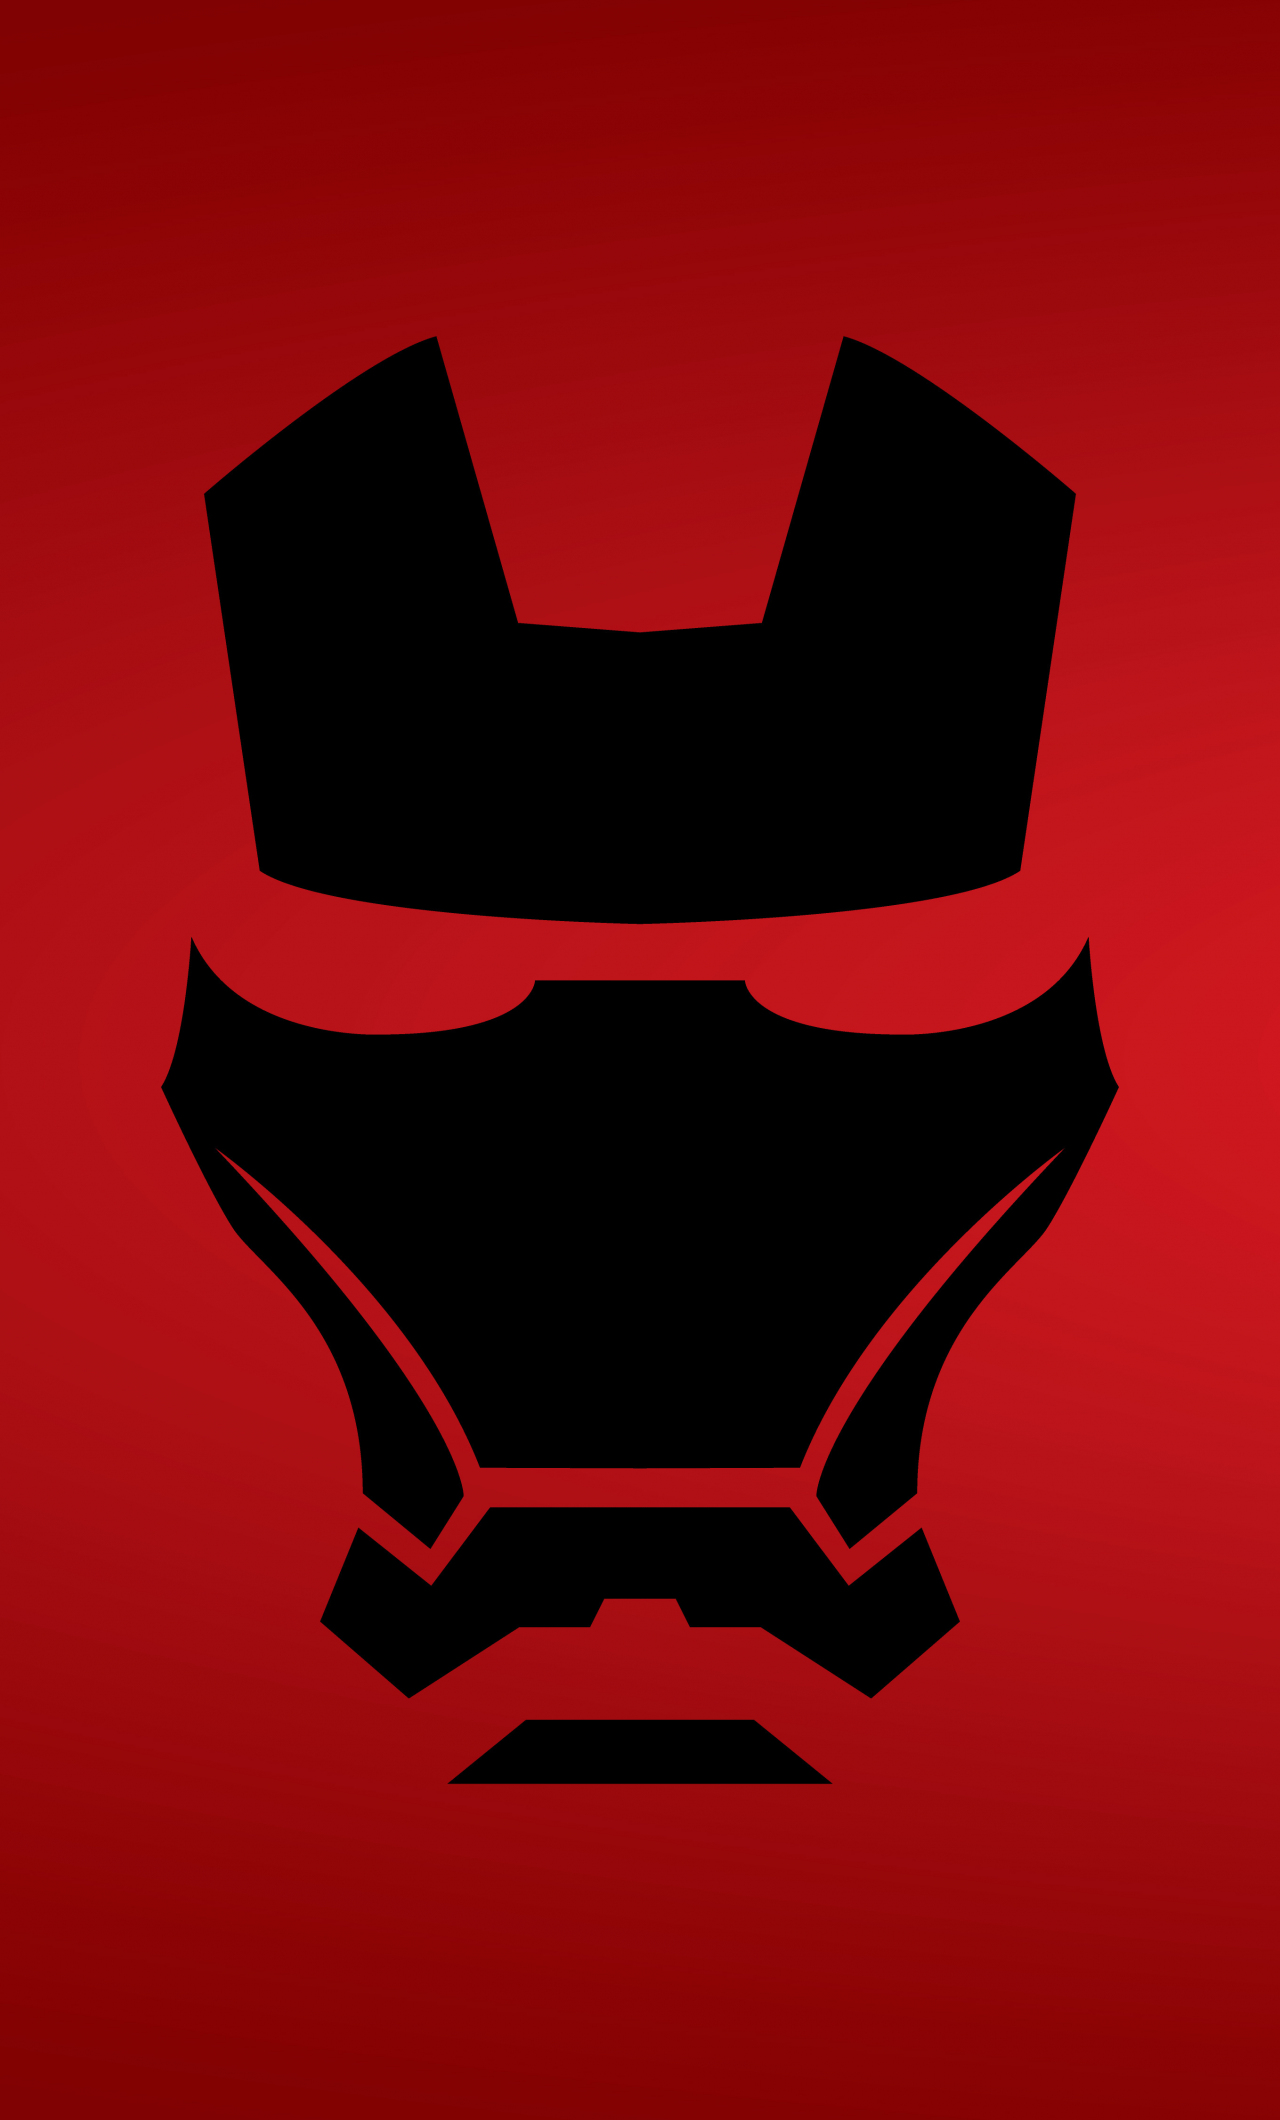 Avengers Endgame Iron Man Red Art iPhone Wallpaper  iPhone Wallpapers